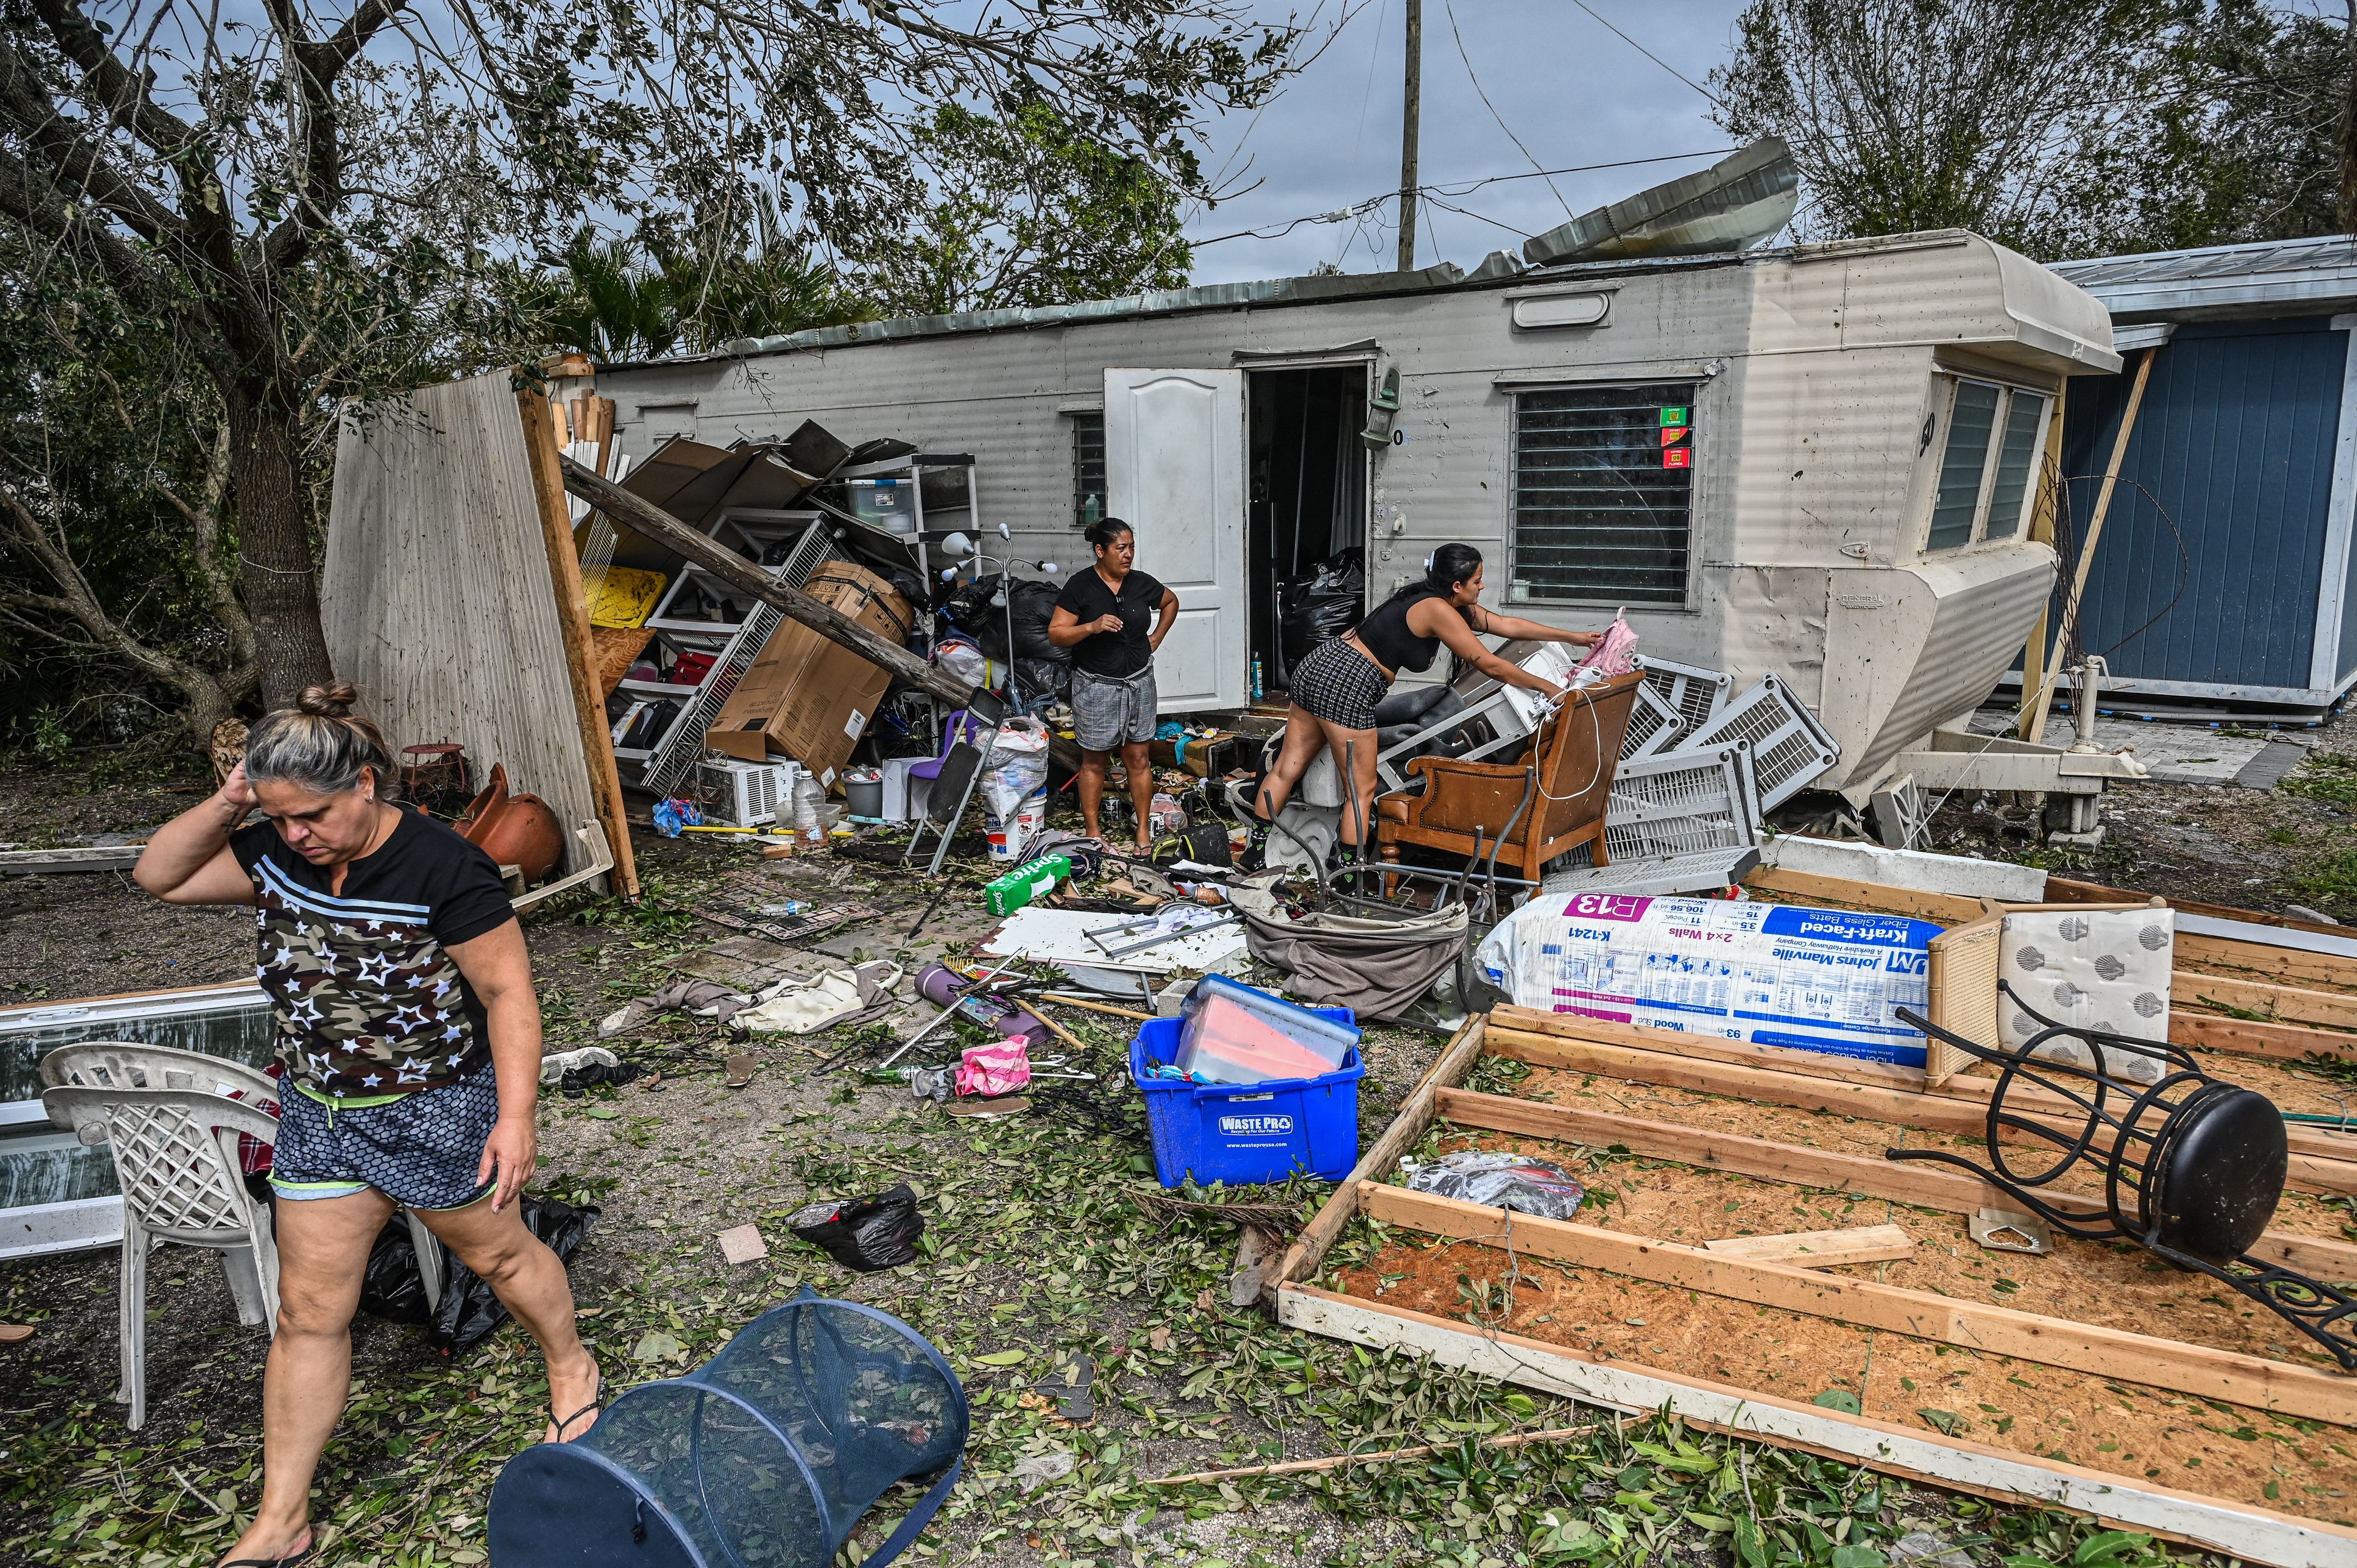 people clean hurricane debris found around their mobile home